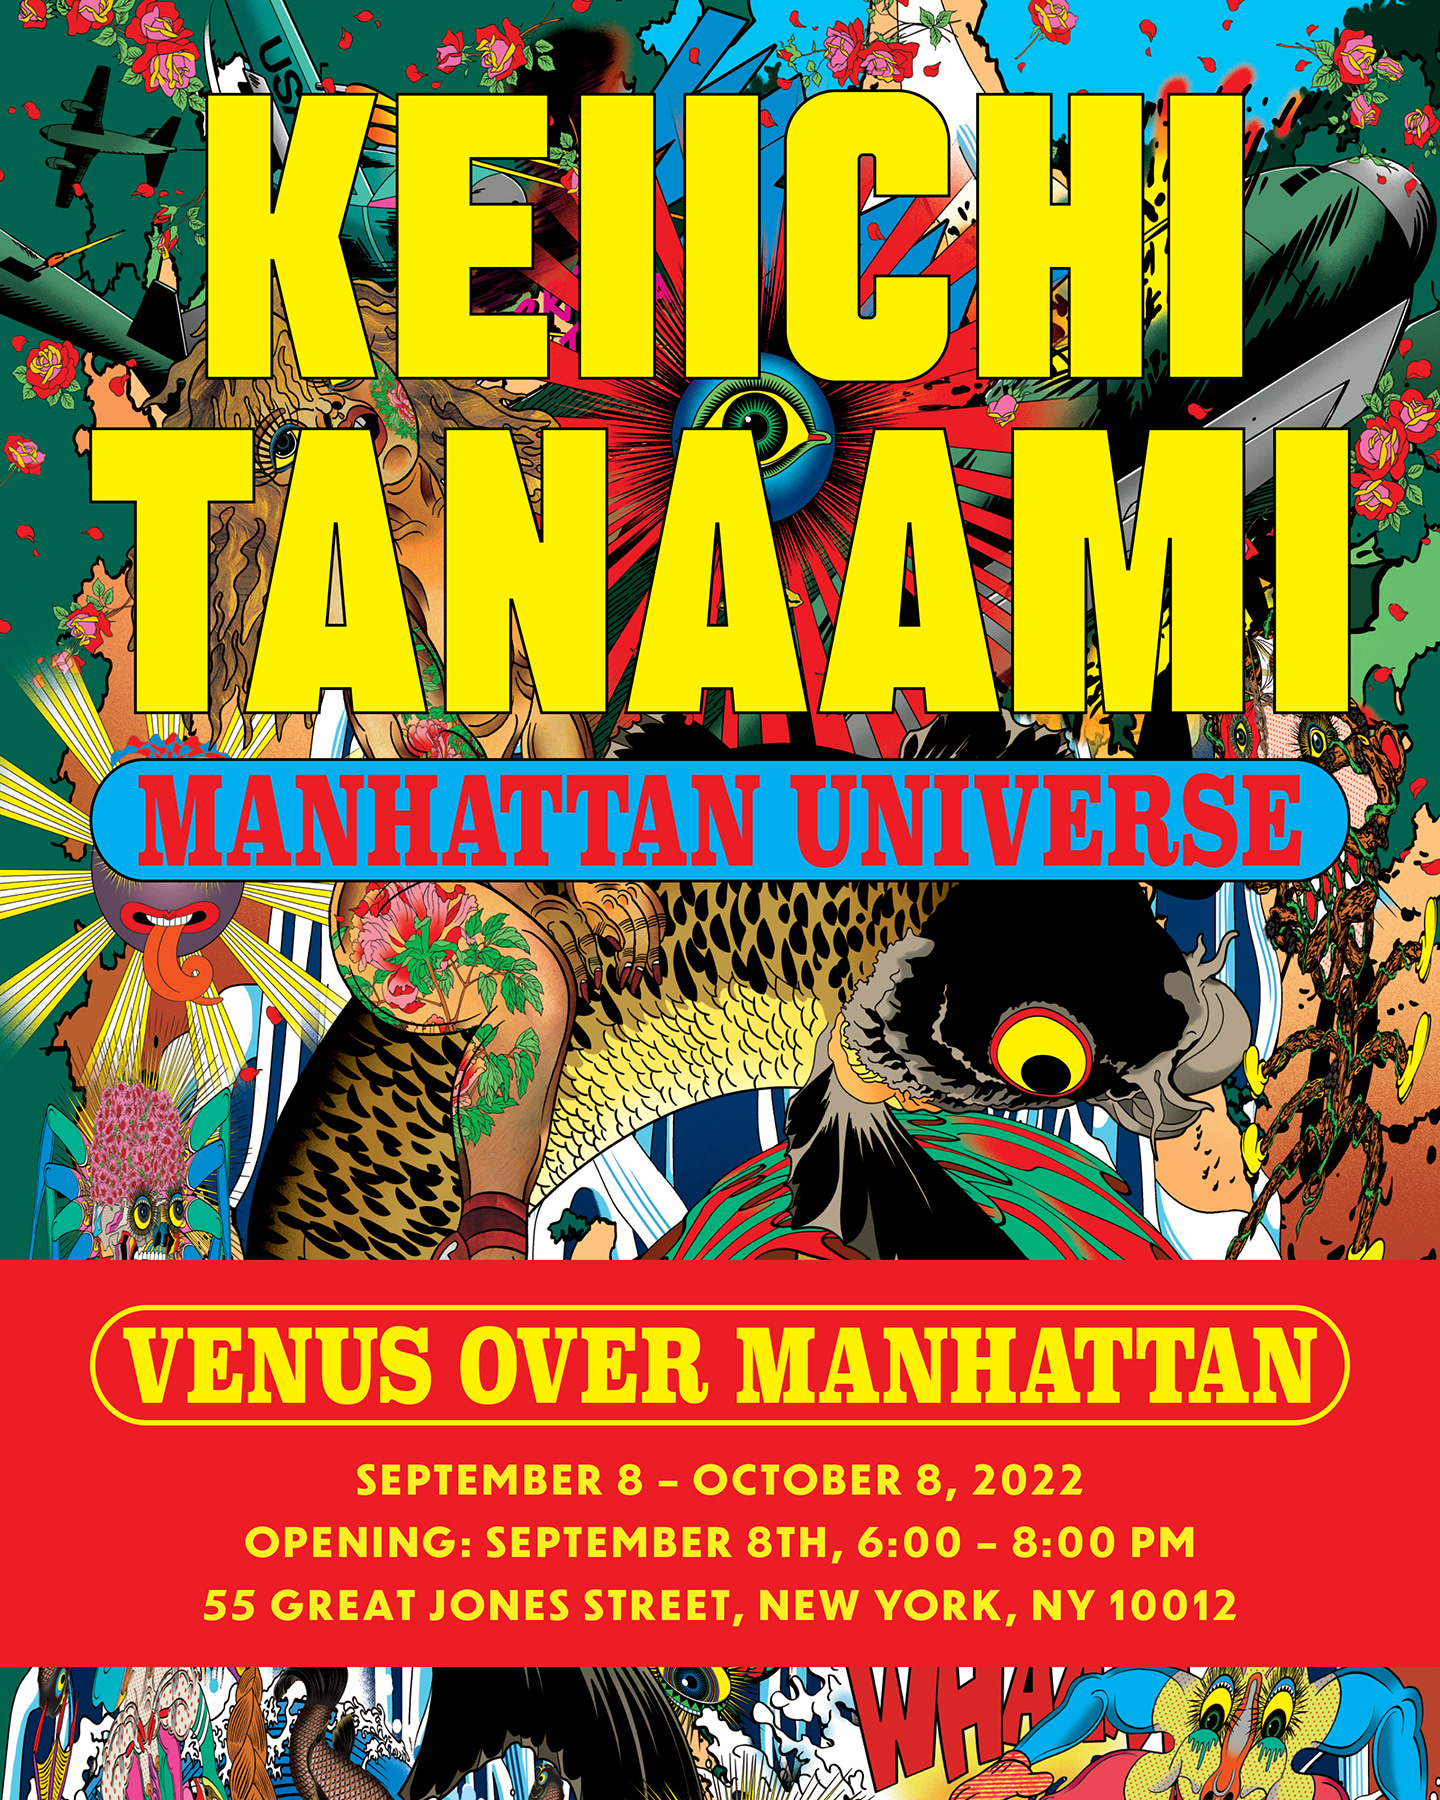 Keiichi Tanaami: Manhattan Universe
September 8 - October 8
55 Great Jones Street

Image Link